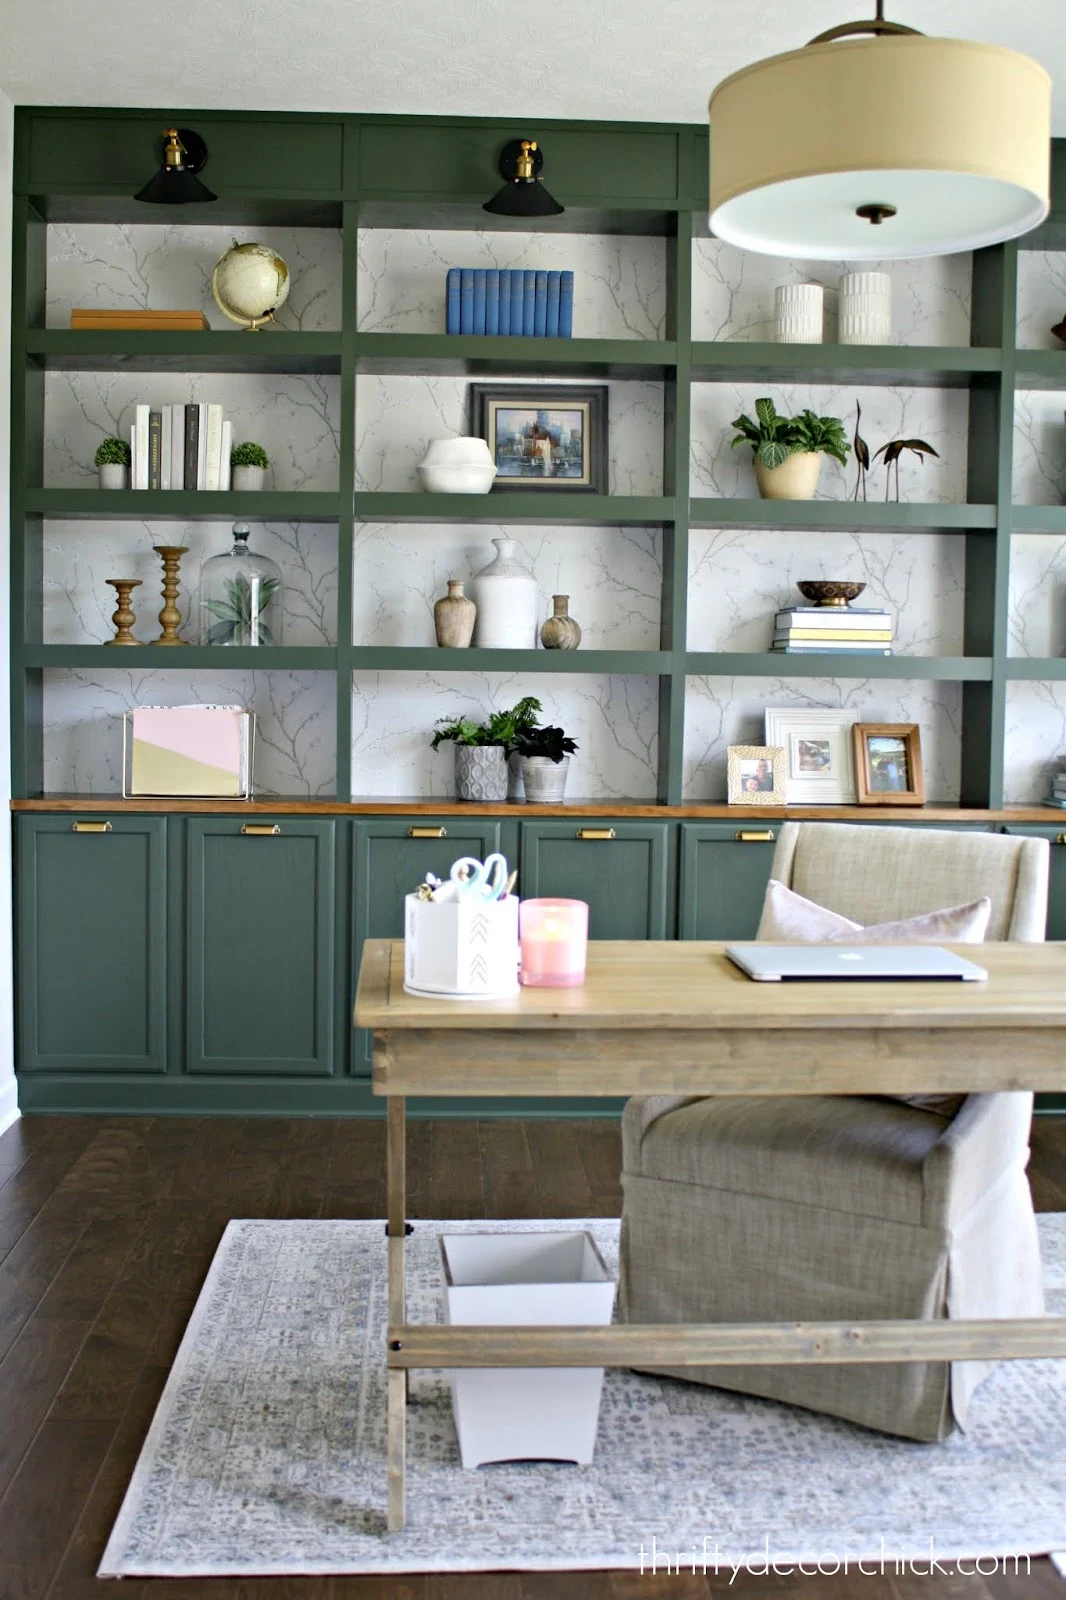 Bookshelf Organization Ideas - How to Style Your Bookshelf